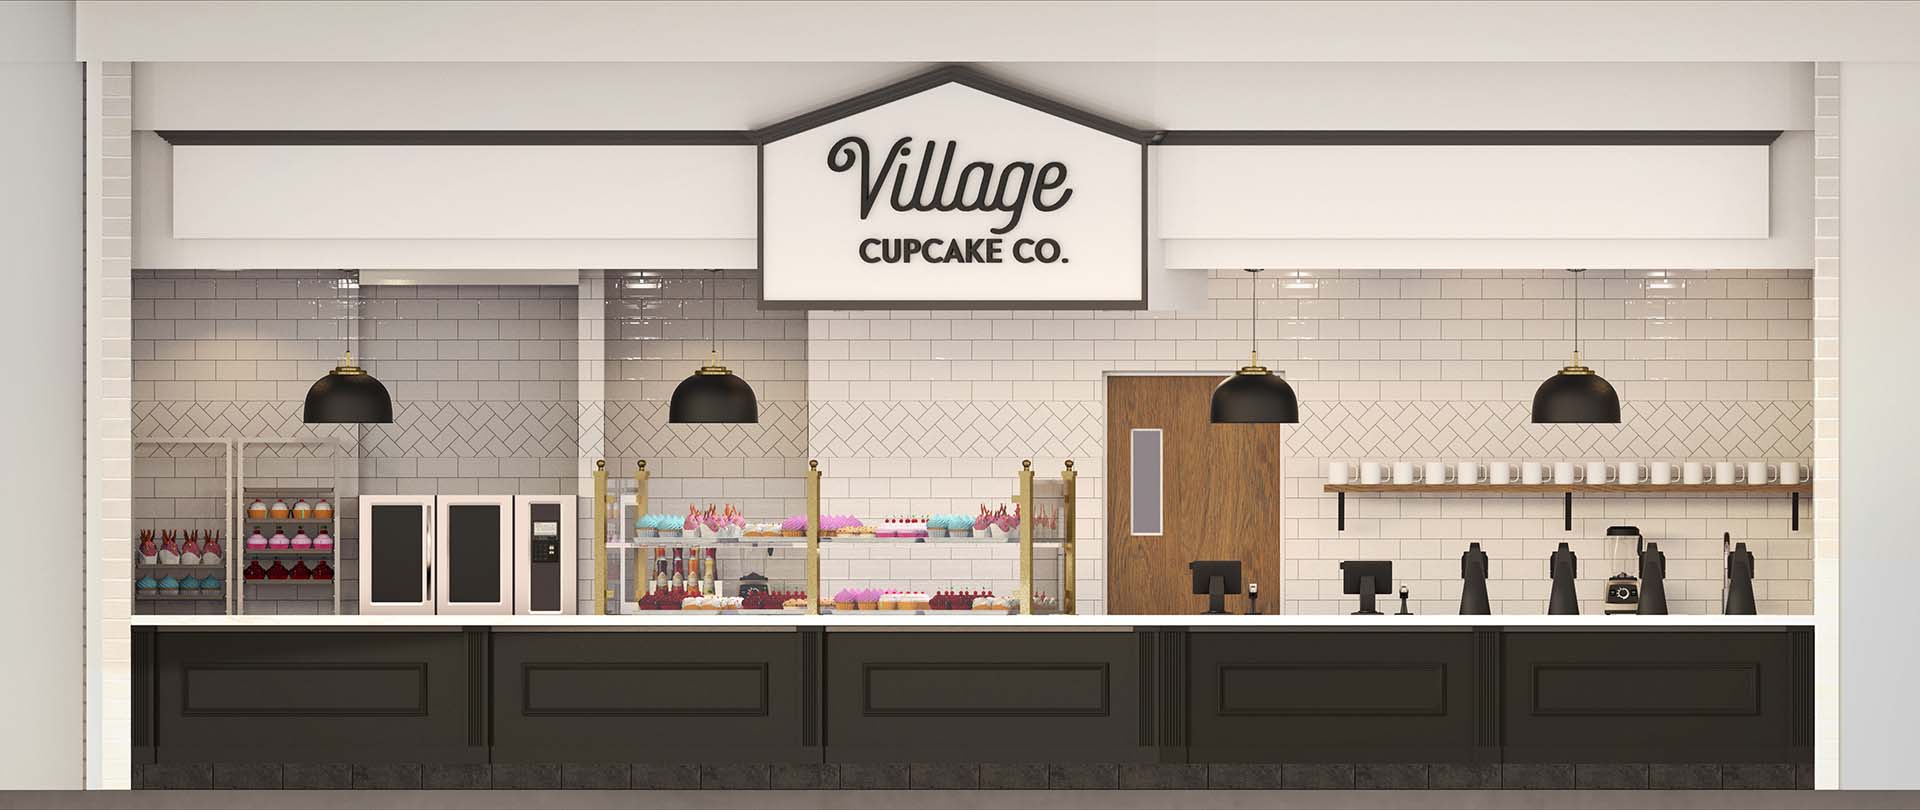 Village Cupcake Company - Commercial - Hospitality 4499-VillageCupcakeCompany-dv2-02b-1920.jpg